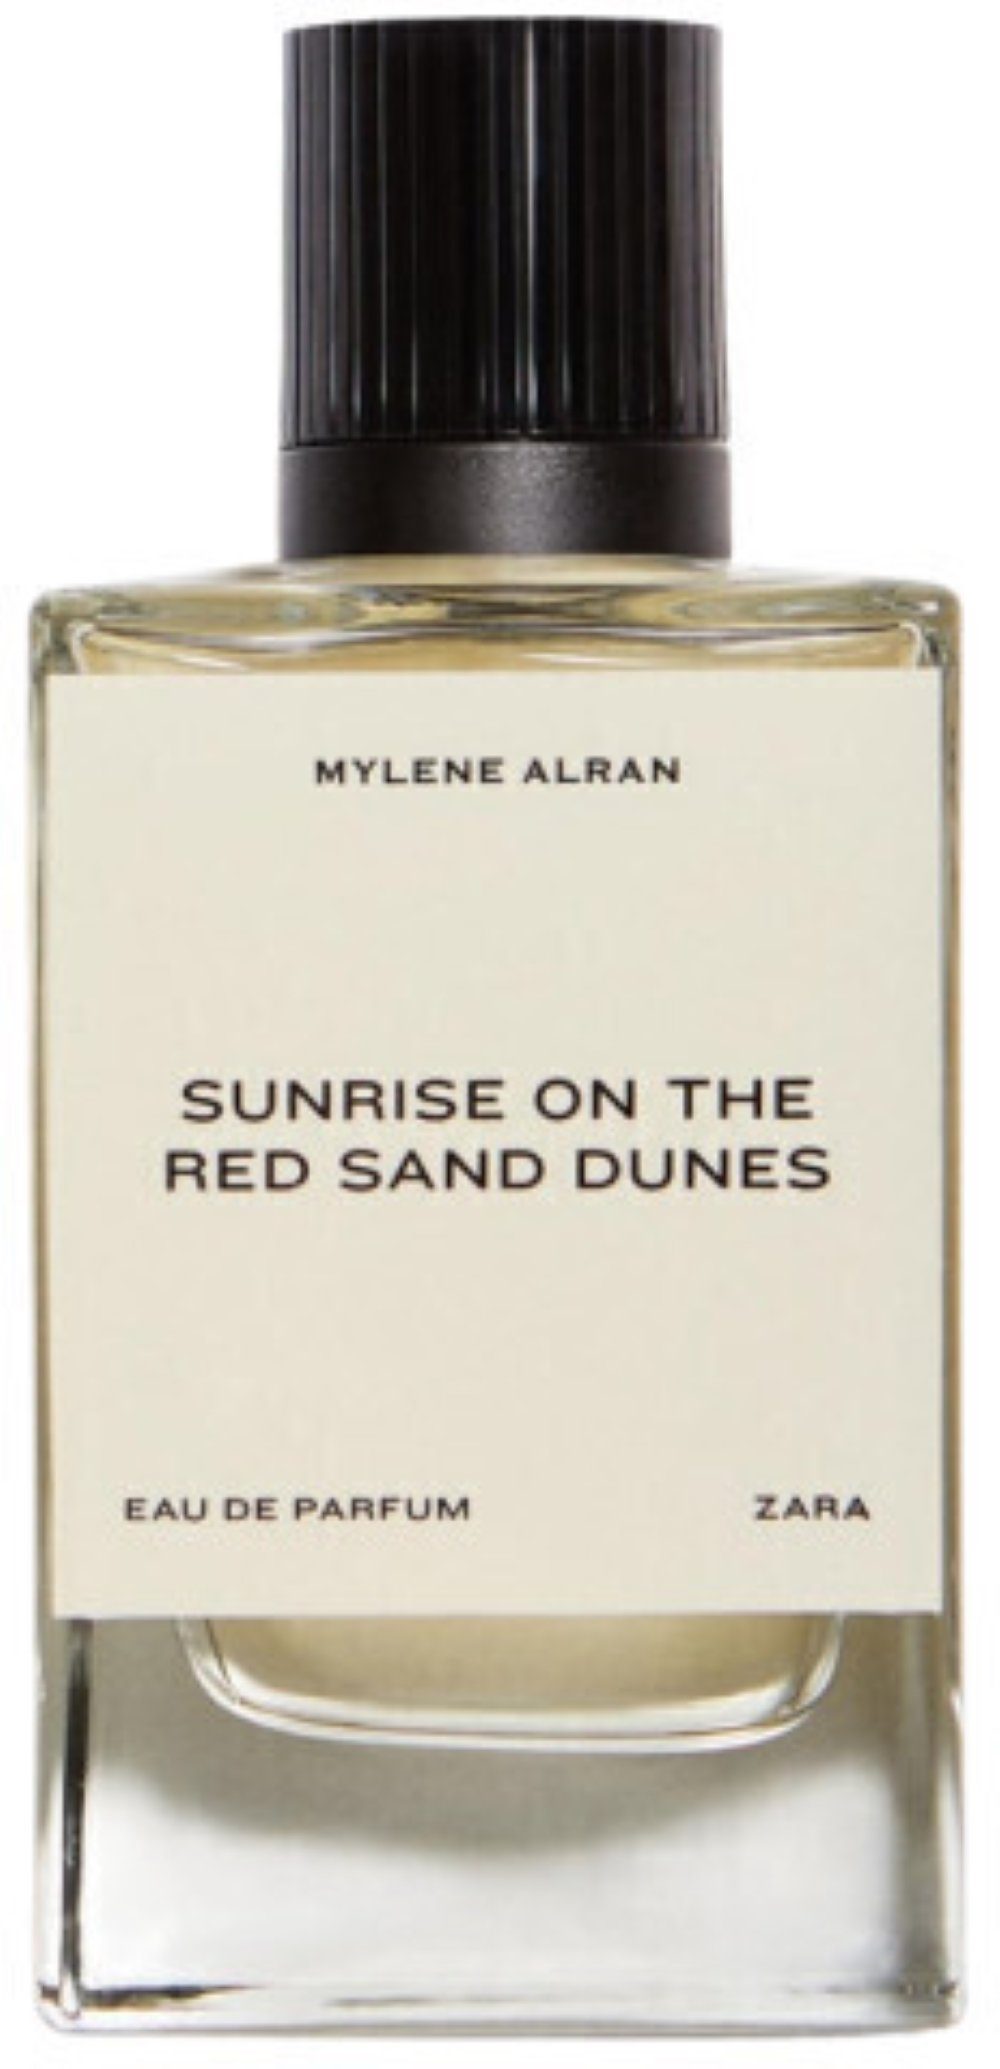 Zara Eau de Red Dunes Sunrise On Parfum The Sand